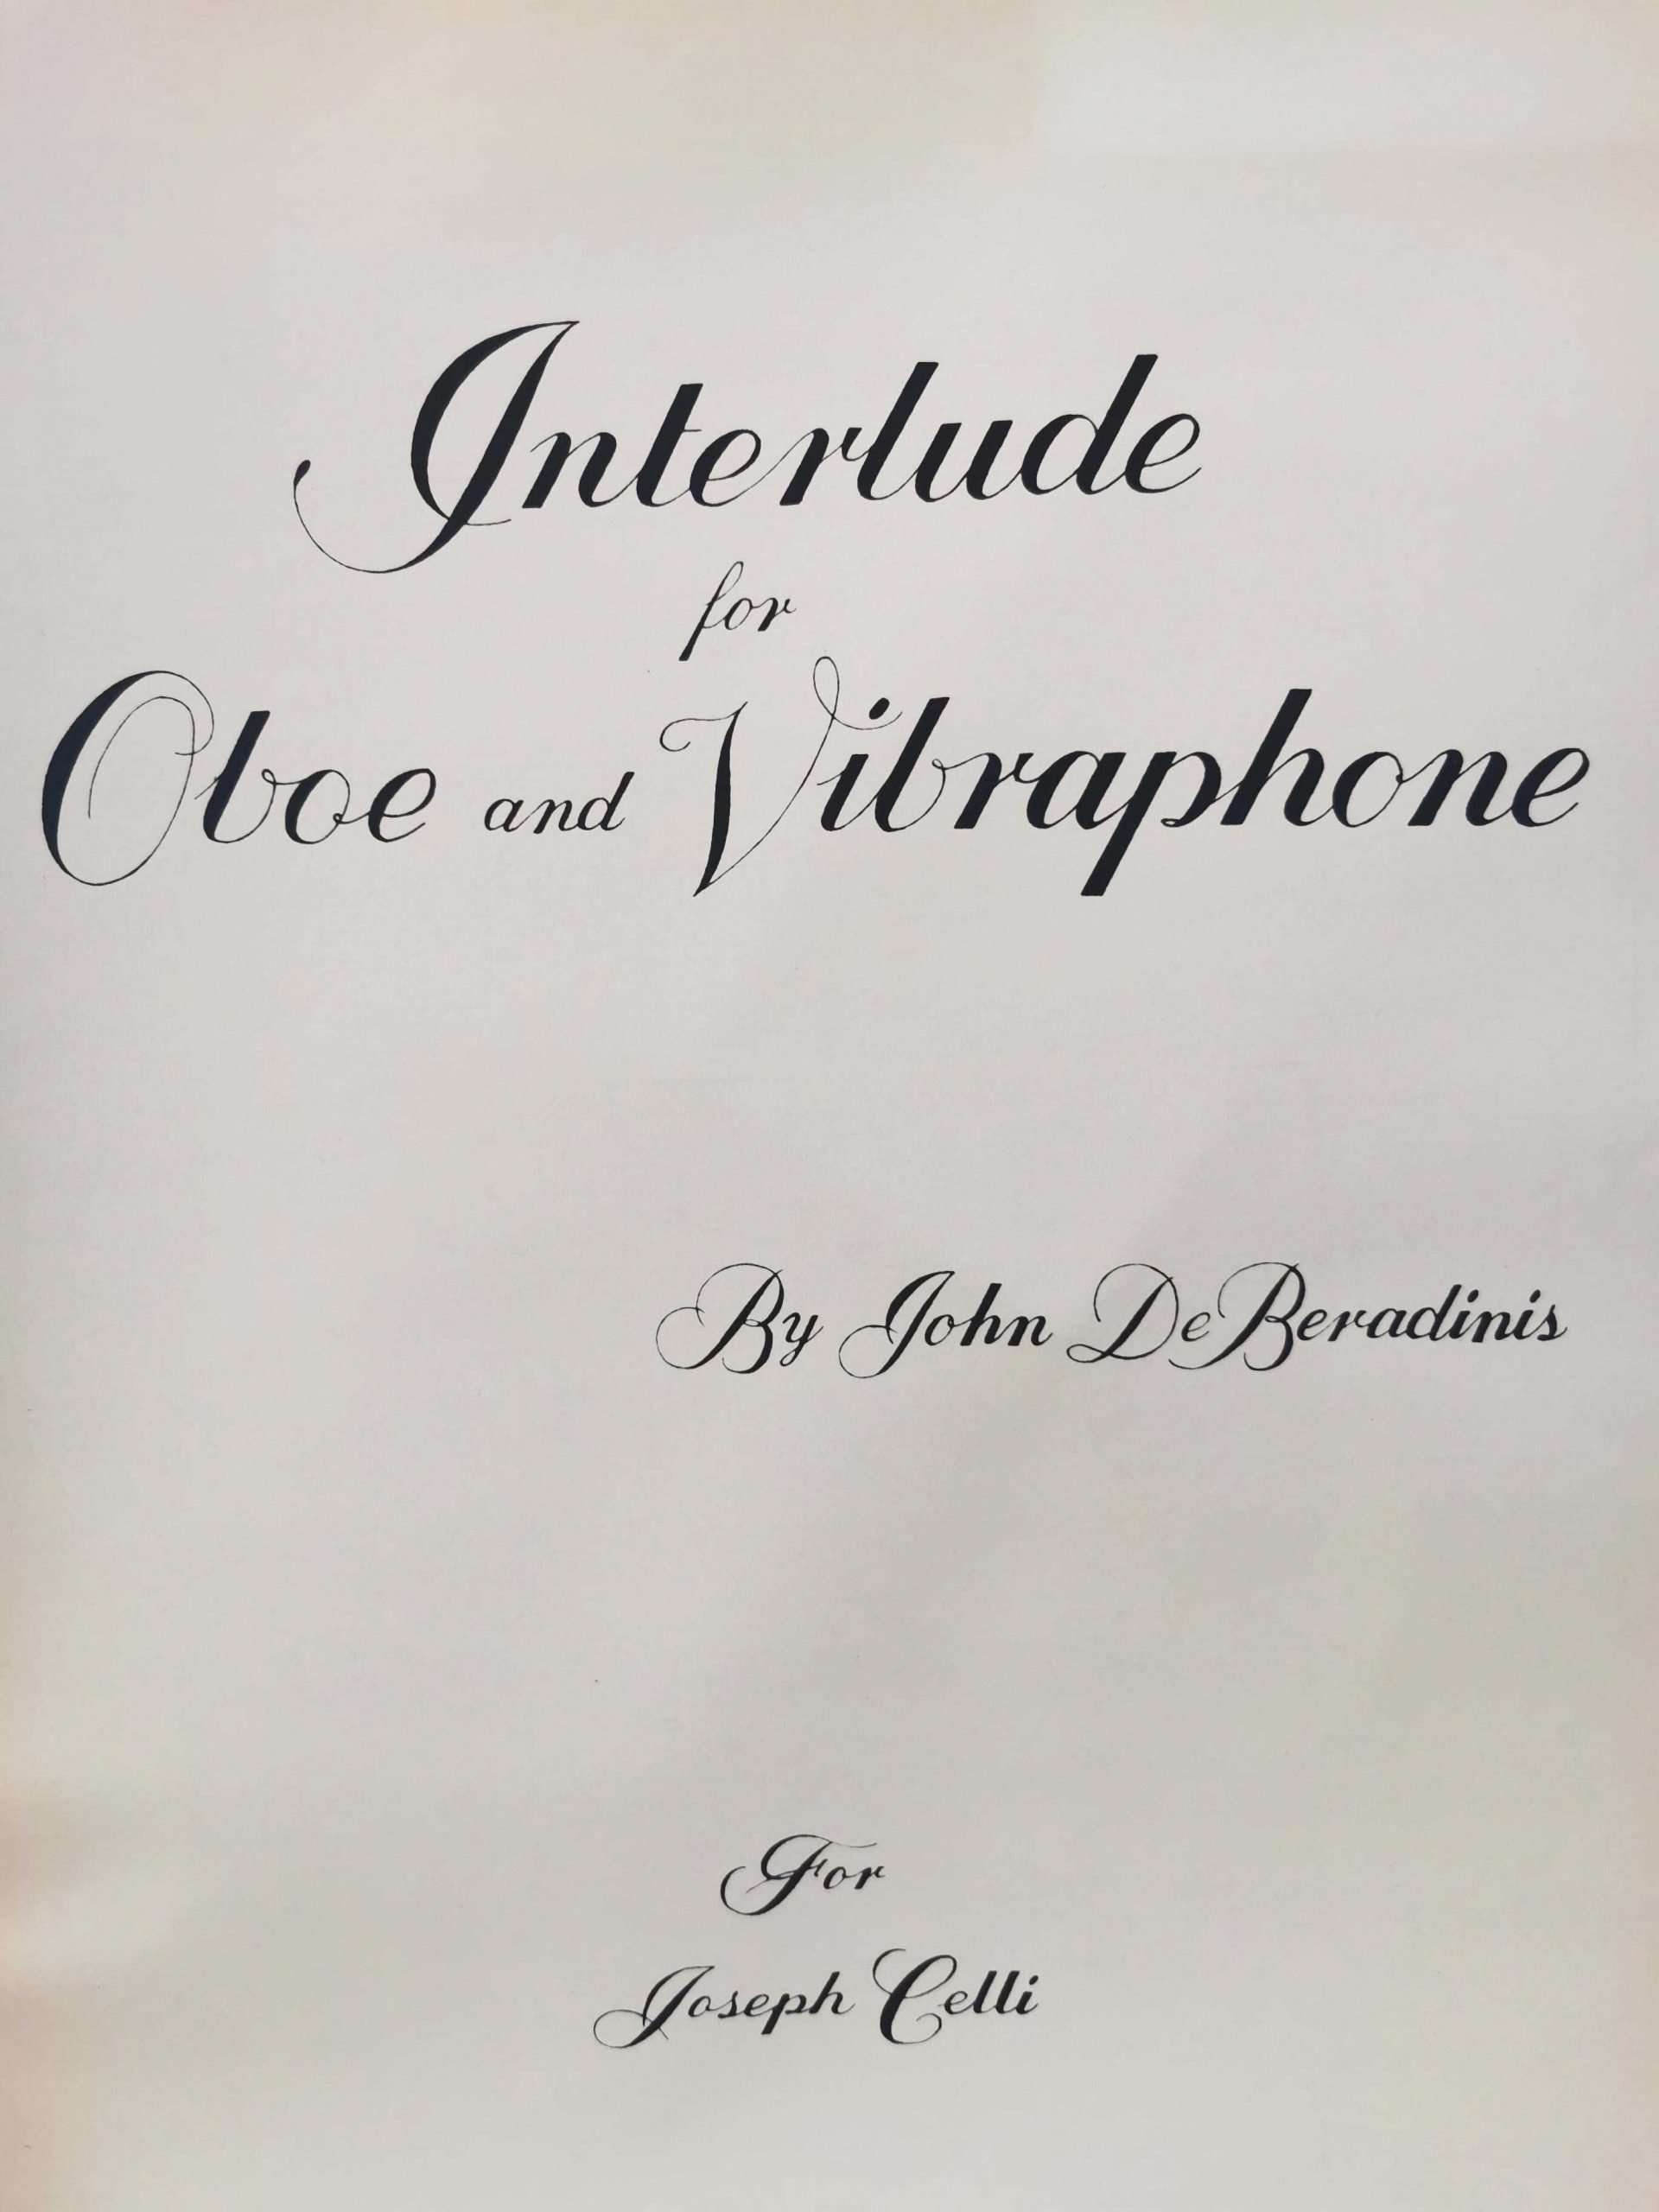 Interlude by John de Beradinis